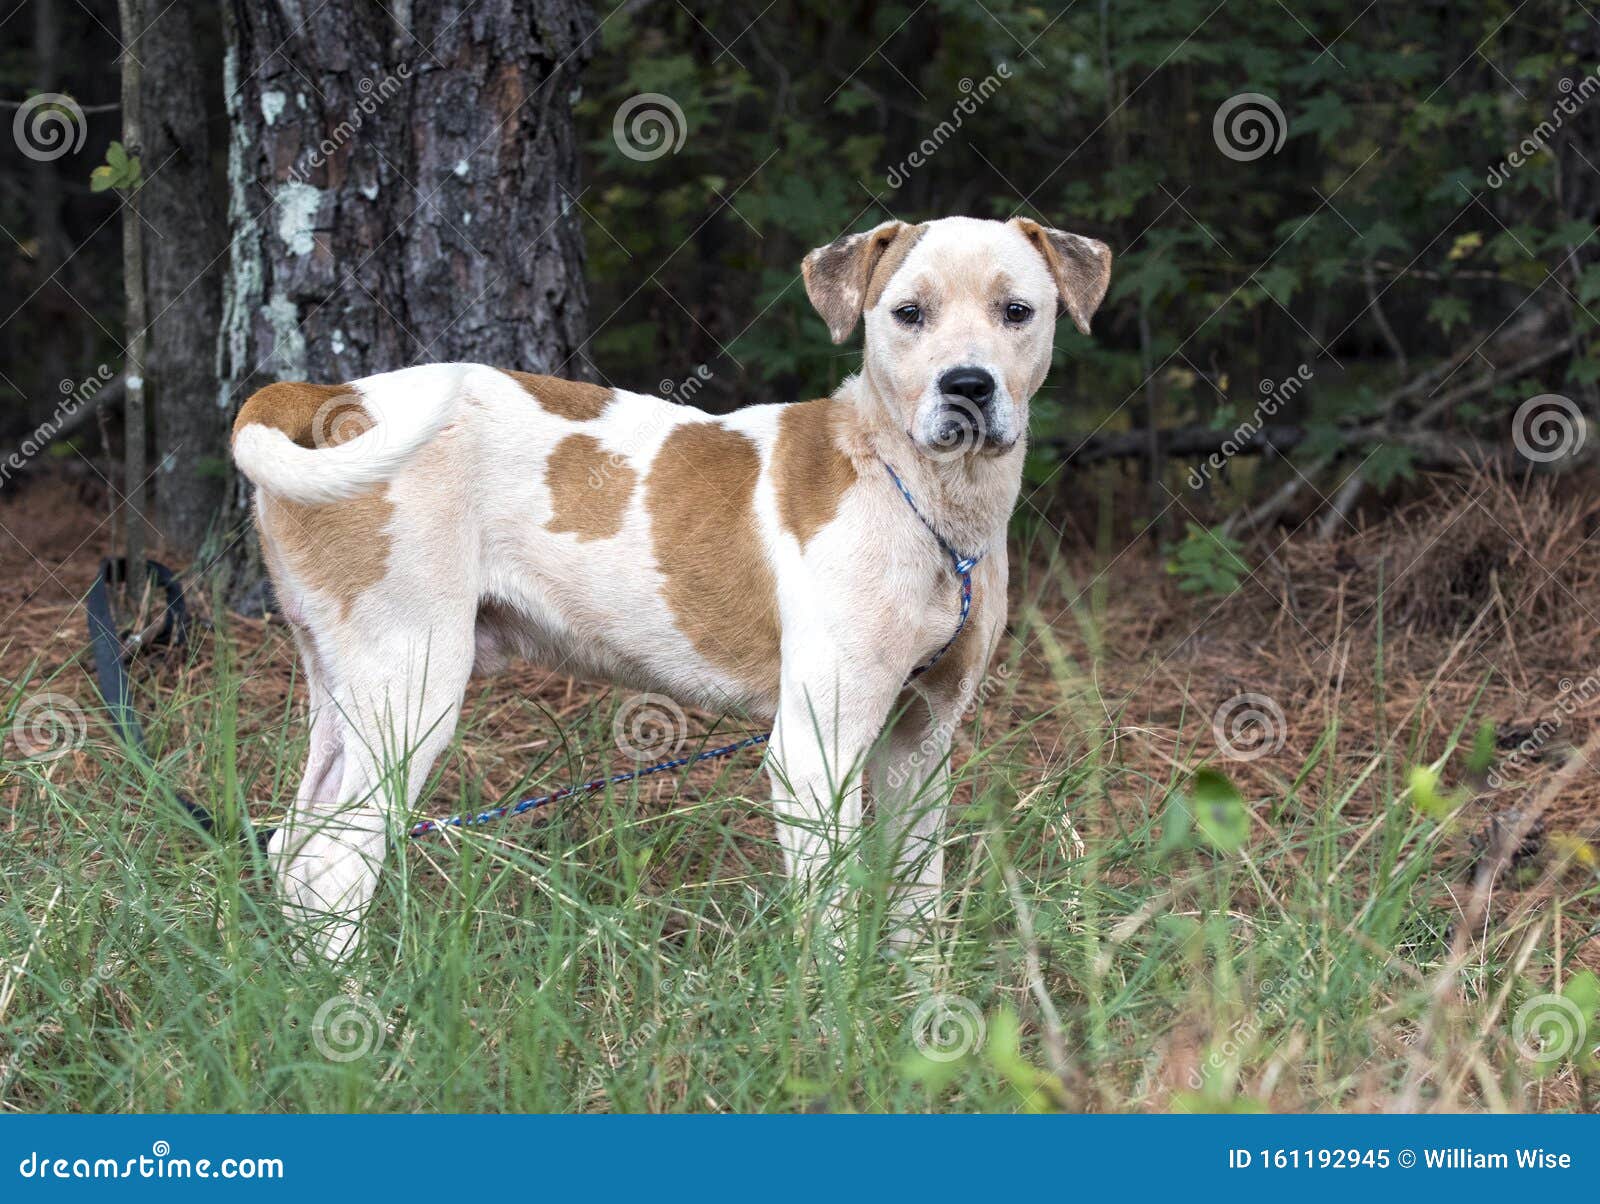 american bulldog hound mix puppies